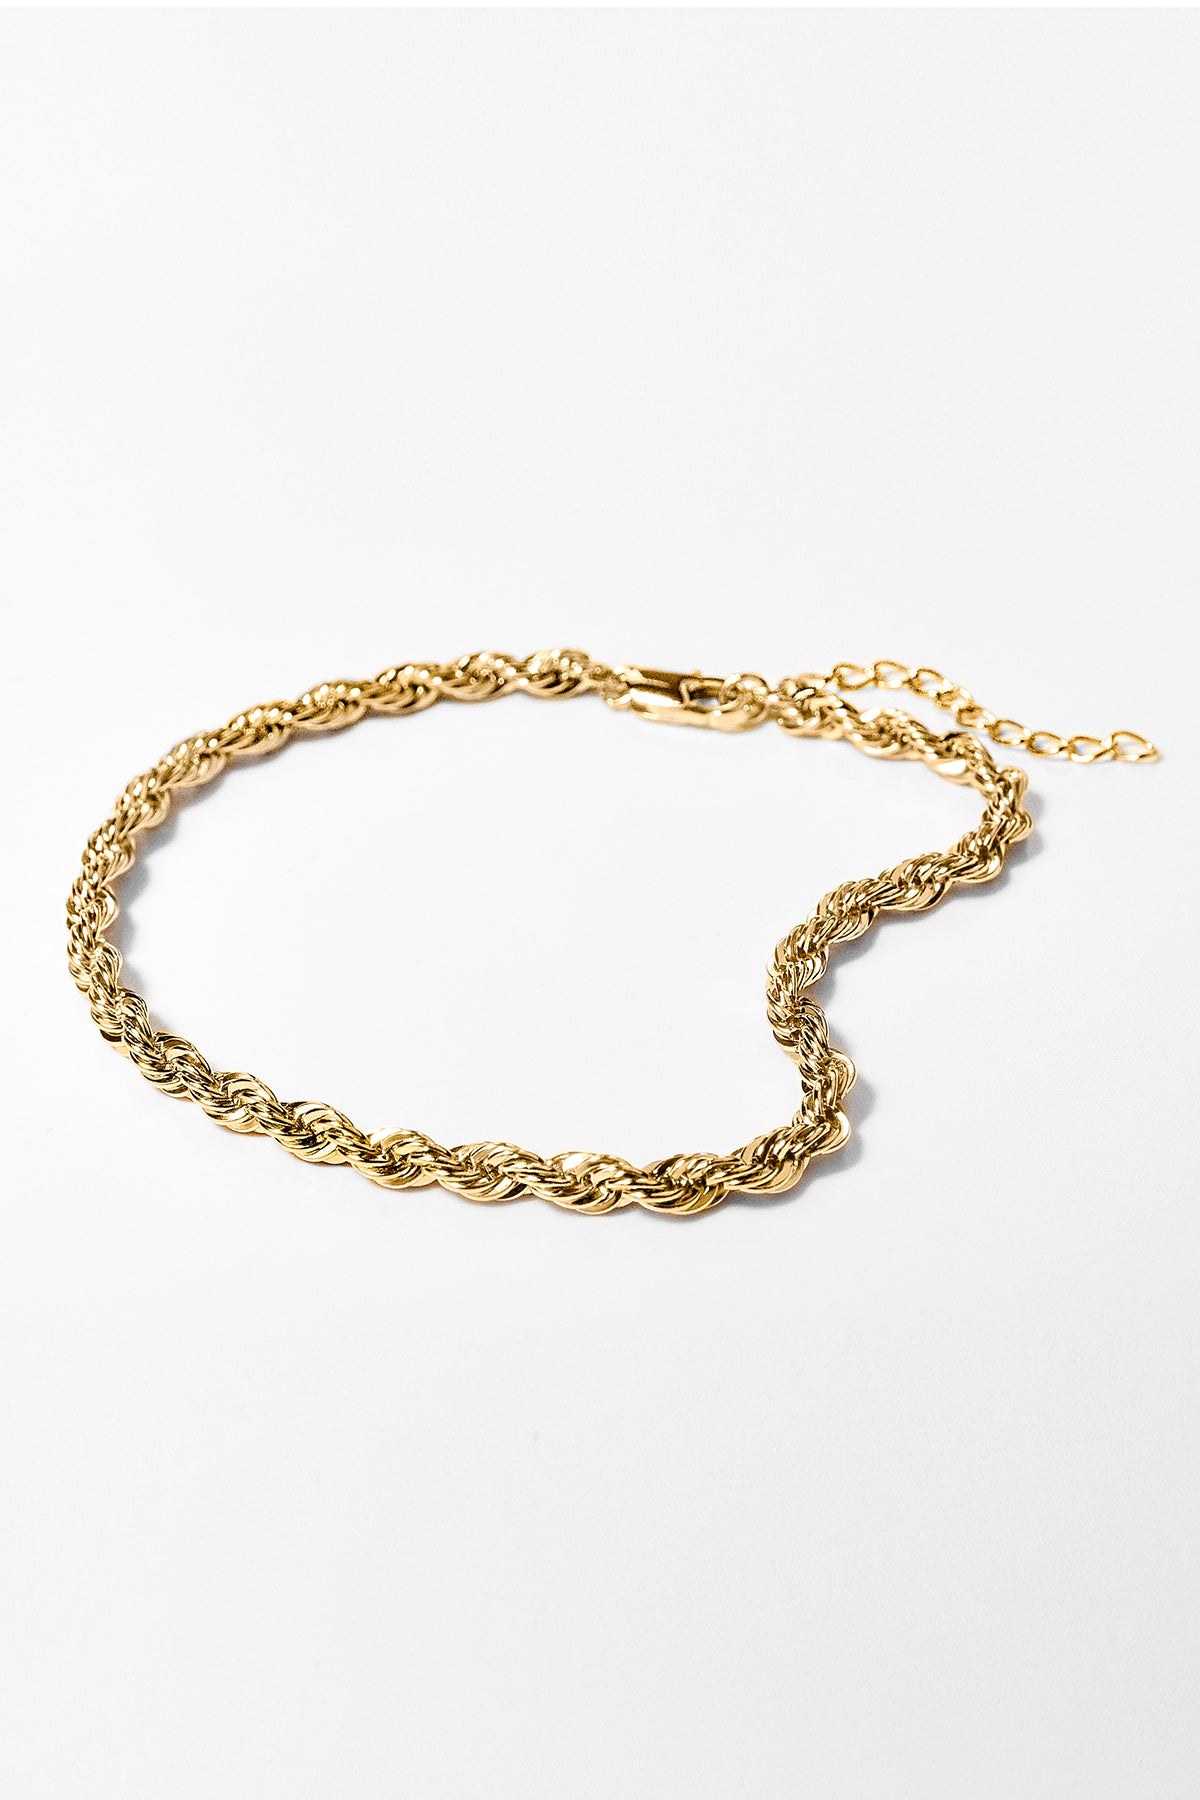 Mini Bowie Robe Bracelet Gold by Thatch-23749393252545